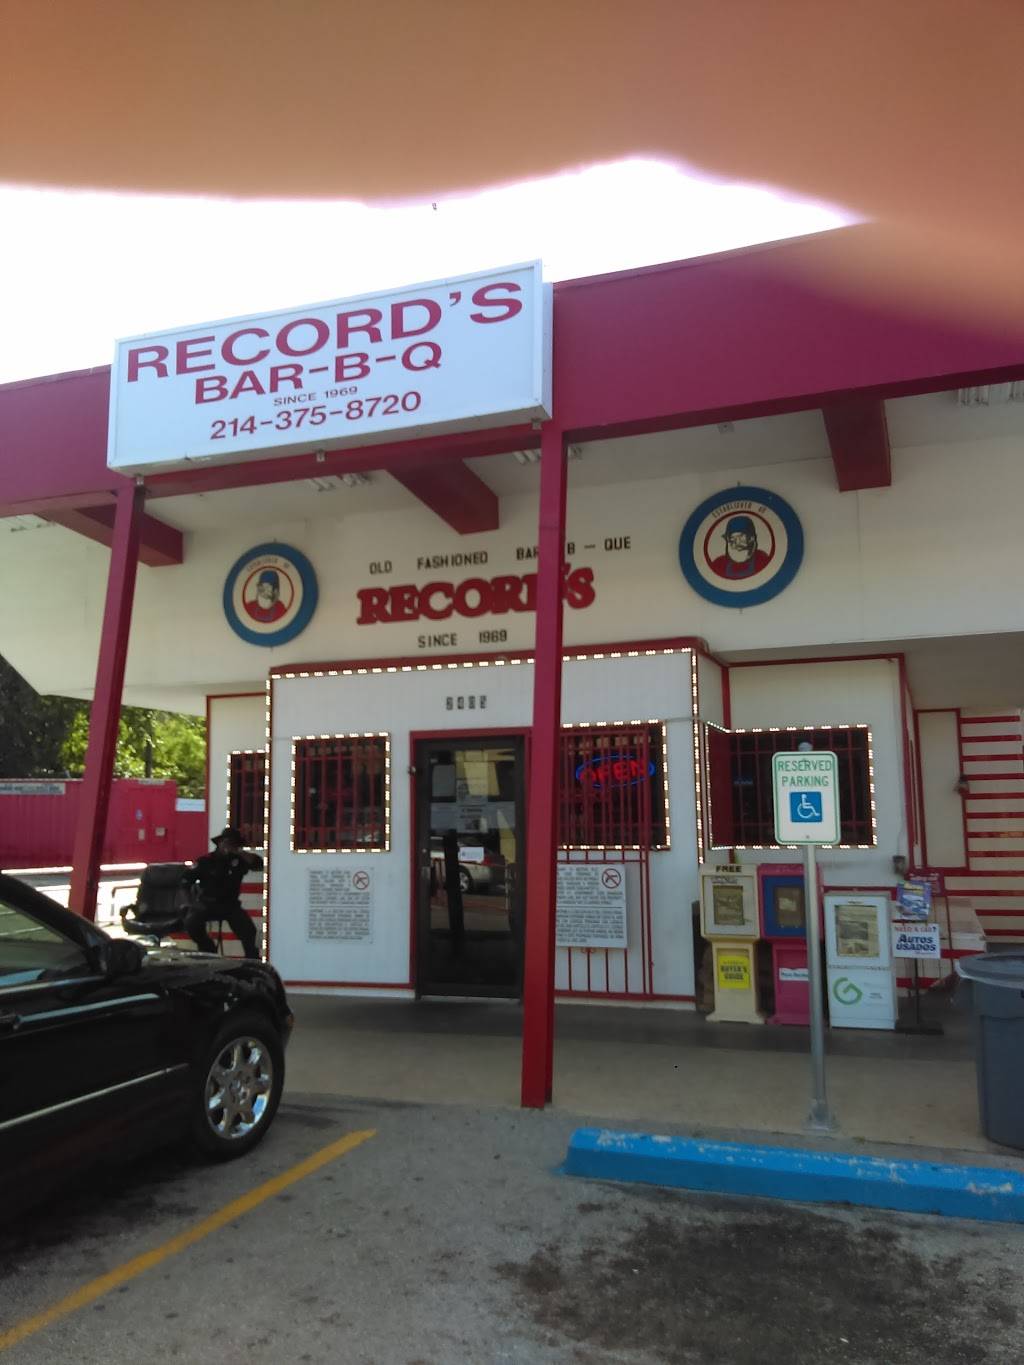 Records Barbecue | restaurant | 2405 S Lancaster Rd, Dallas, TX 75216, USA | 2143758720 OR +1 214-375-8720